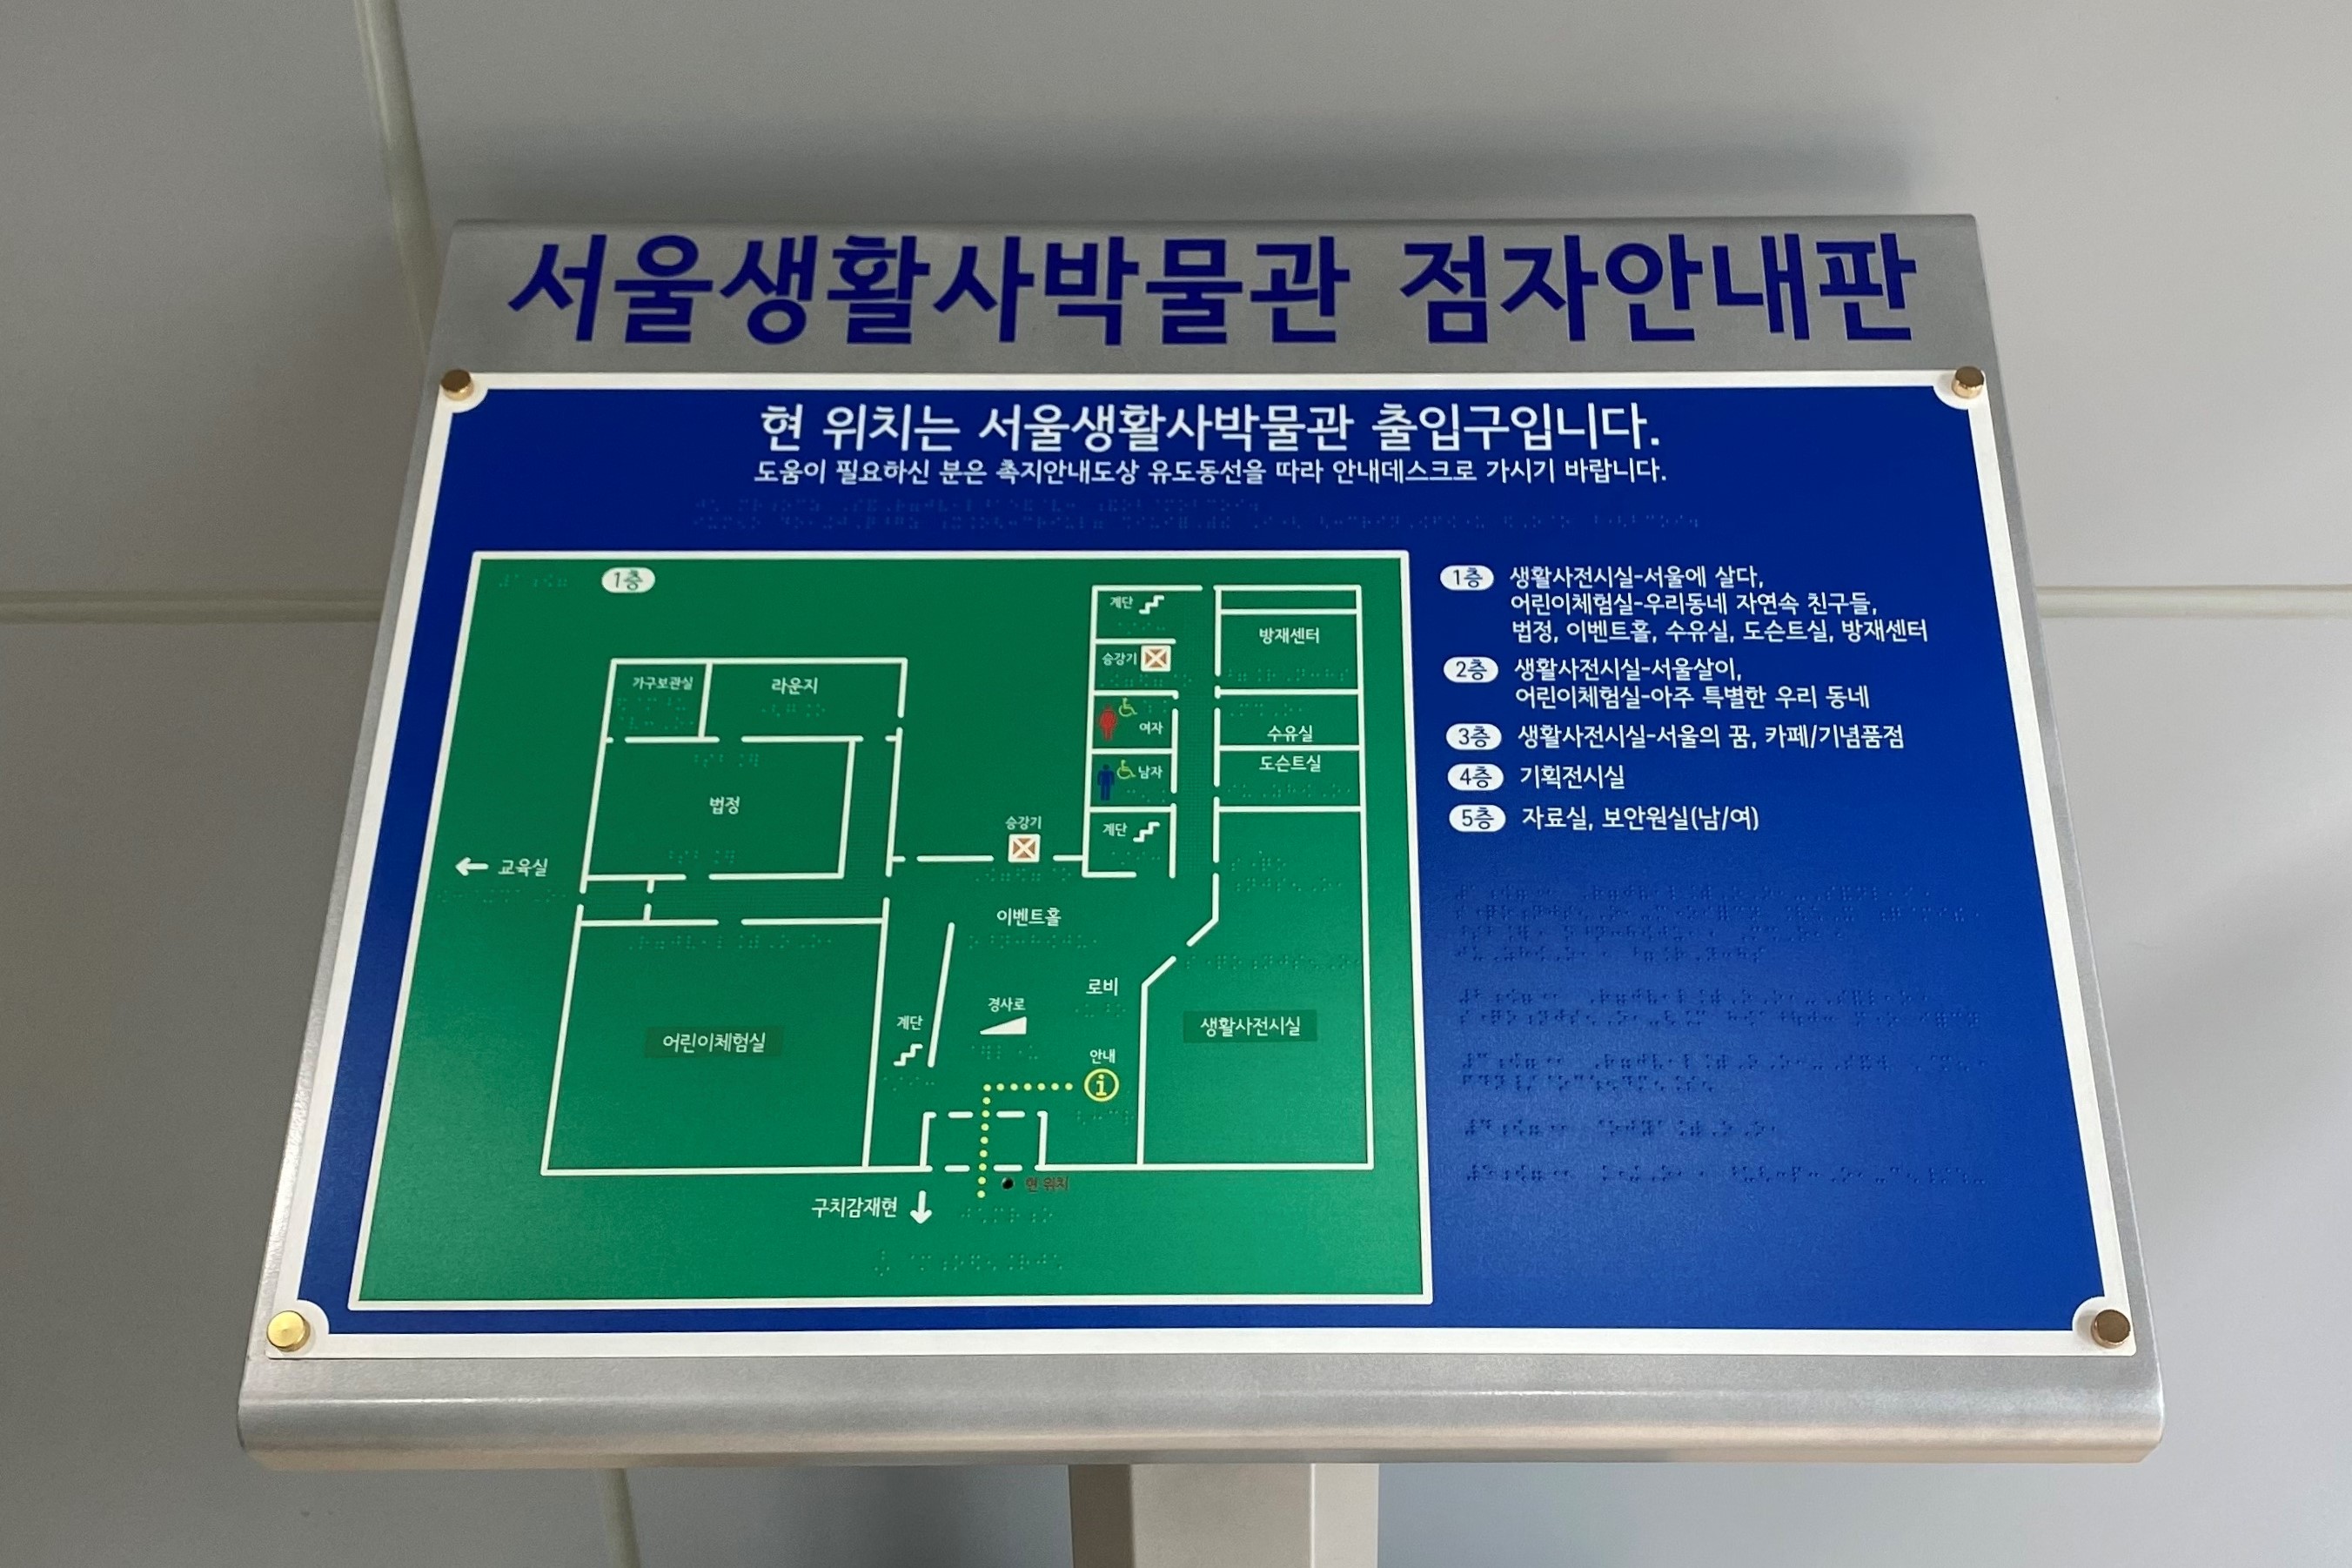 Information board/ Information desk 0 : Korean tactile braille map board installed at the main entrance
